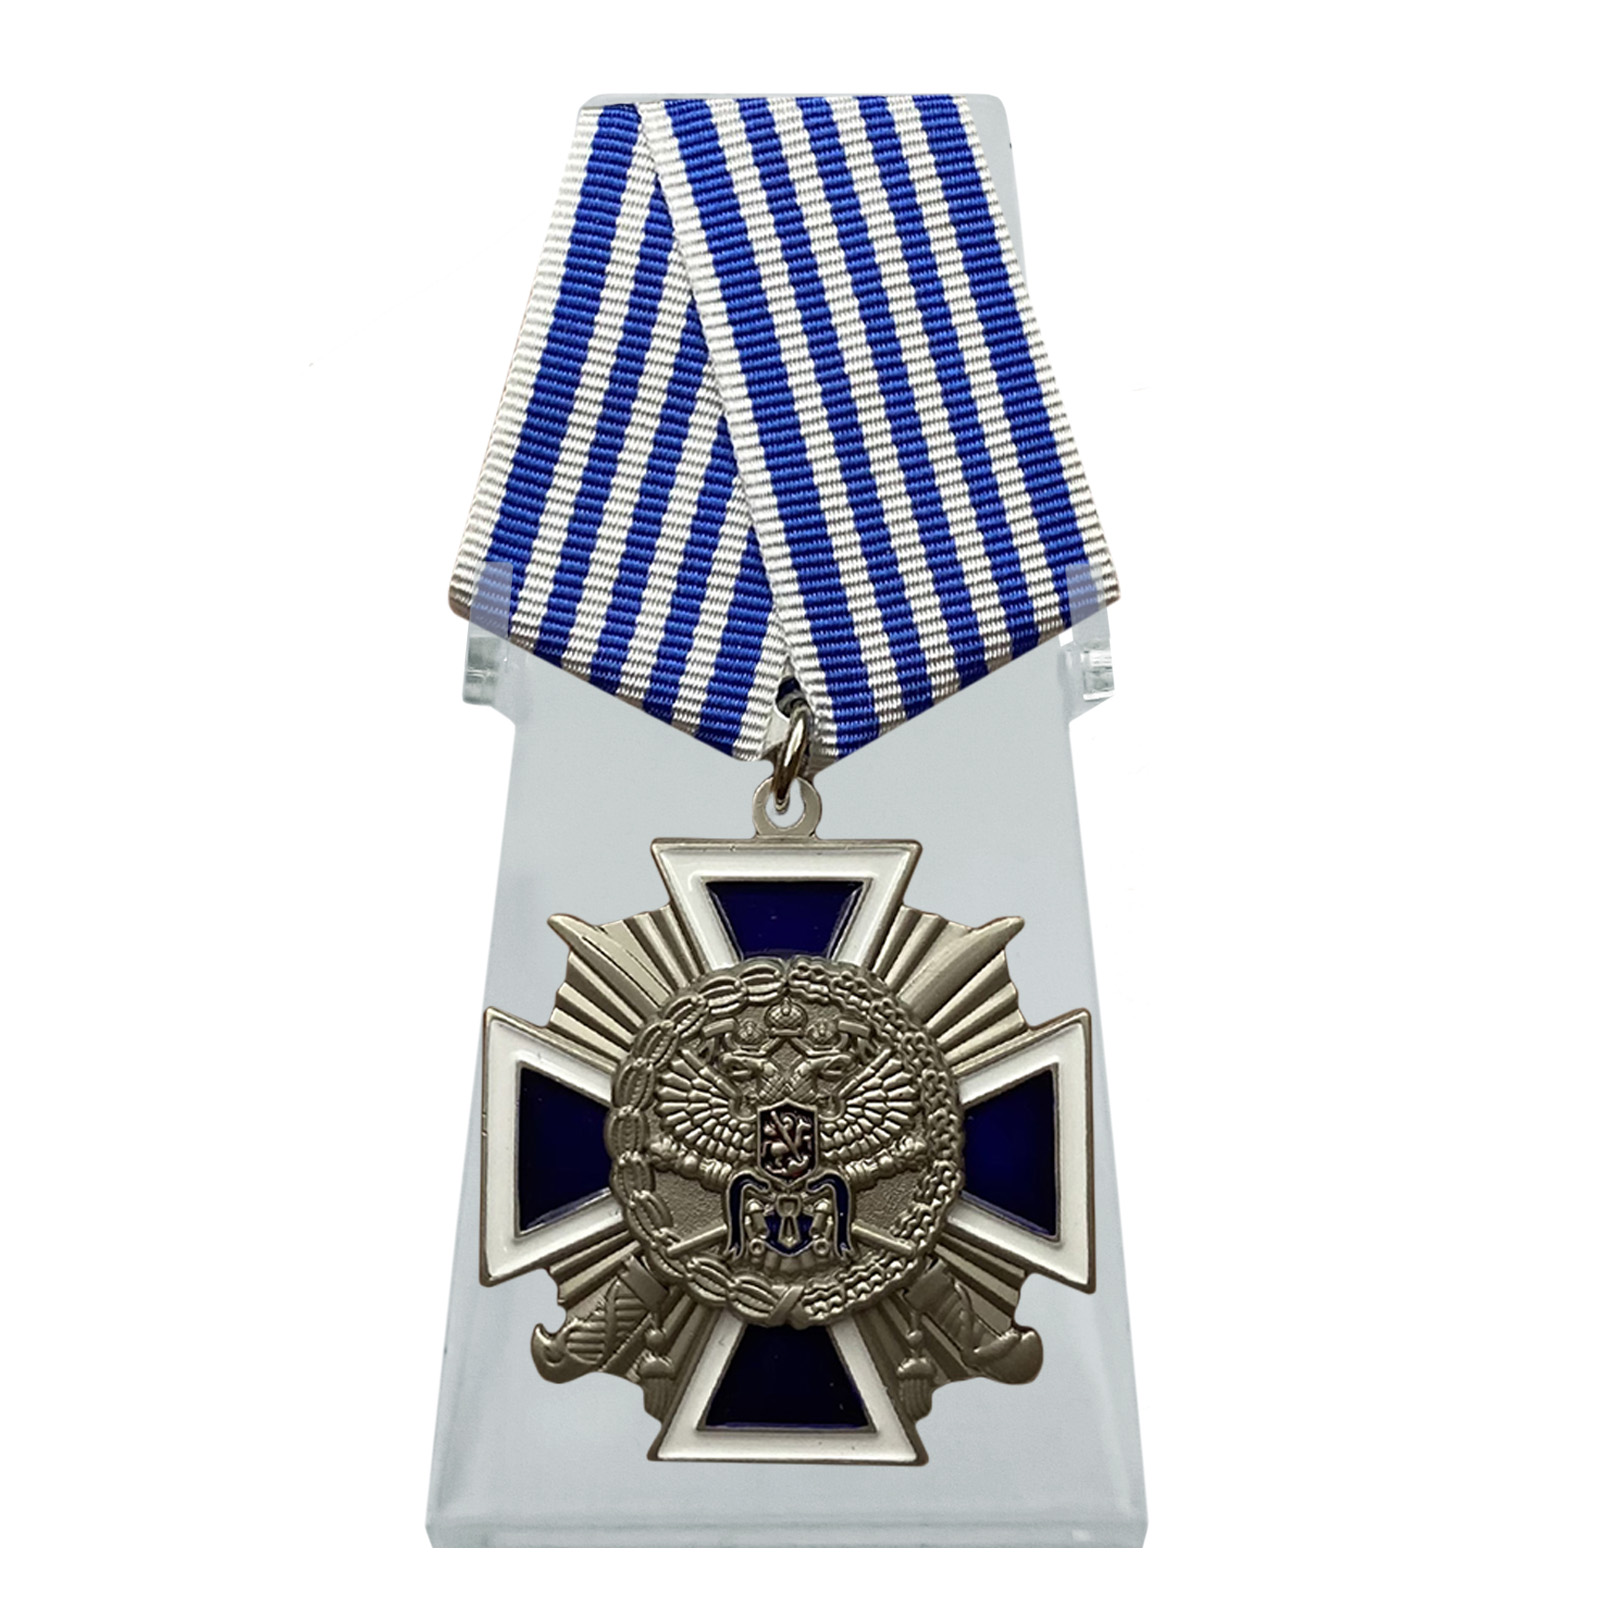 Крест "За заслуги перед казачеством" 4 степени на подставке